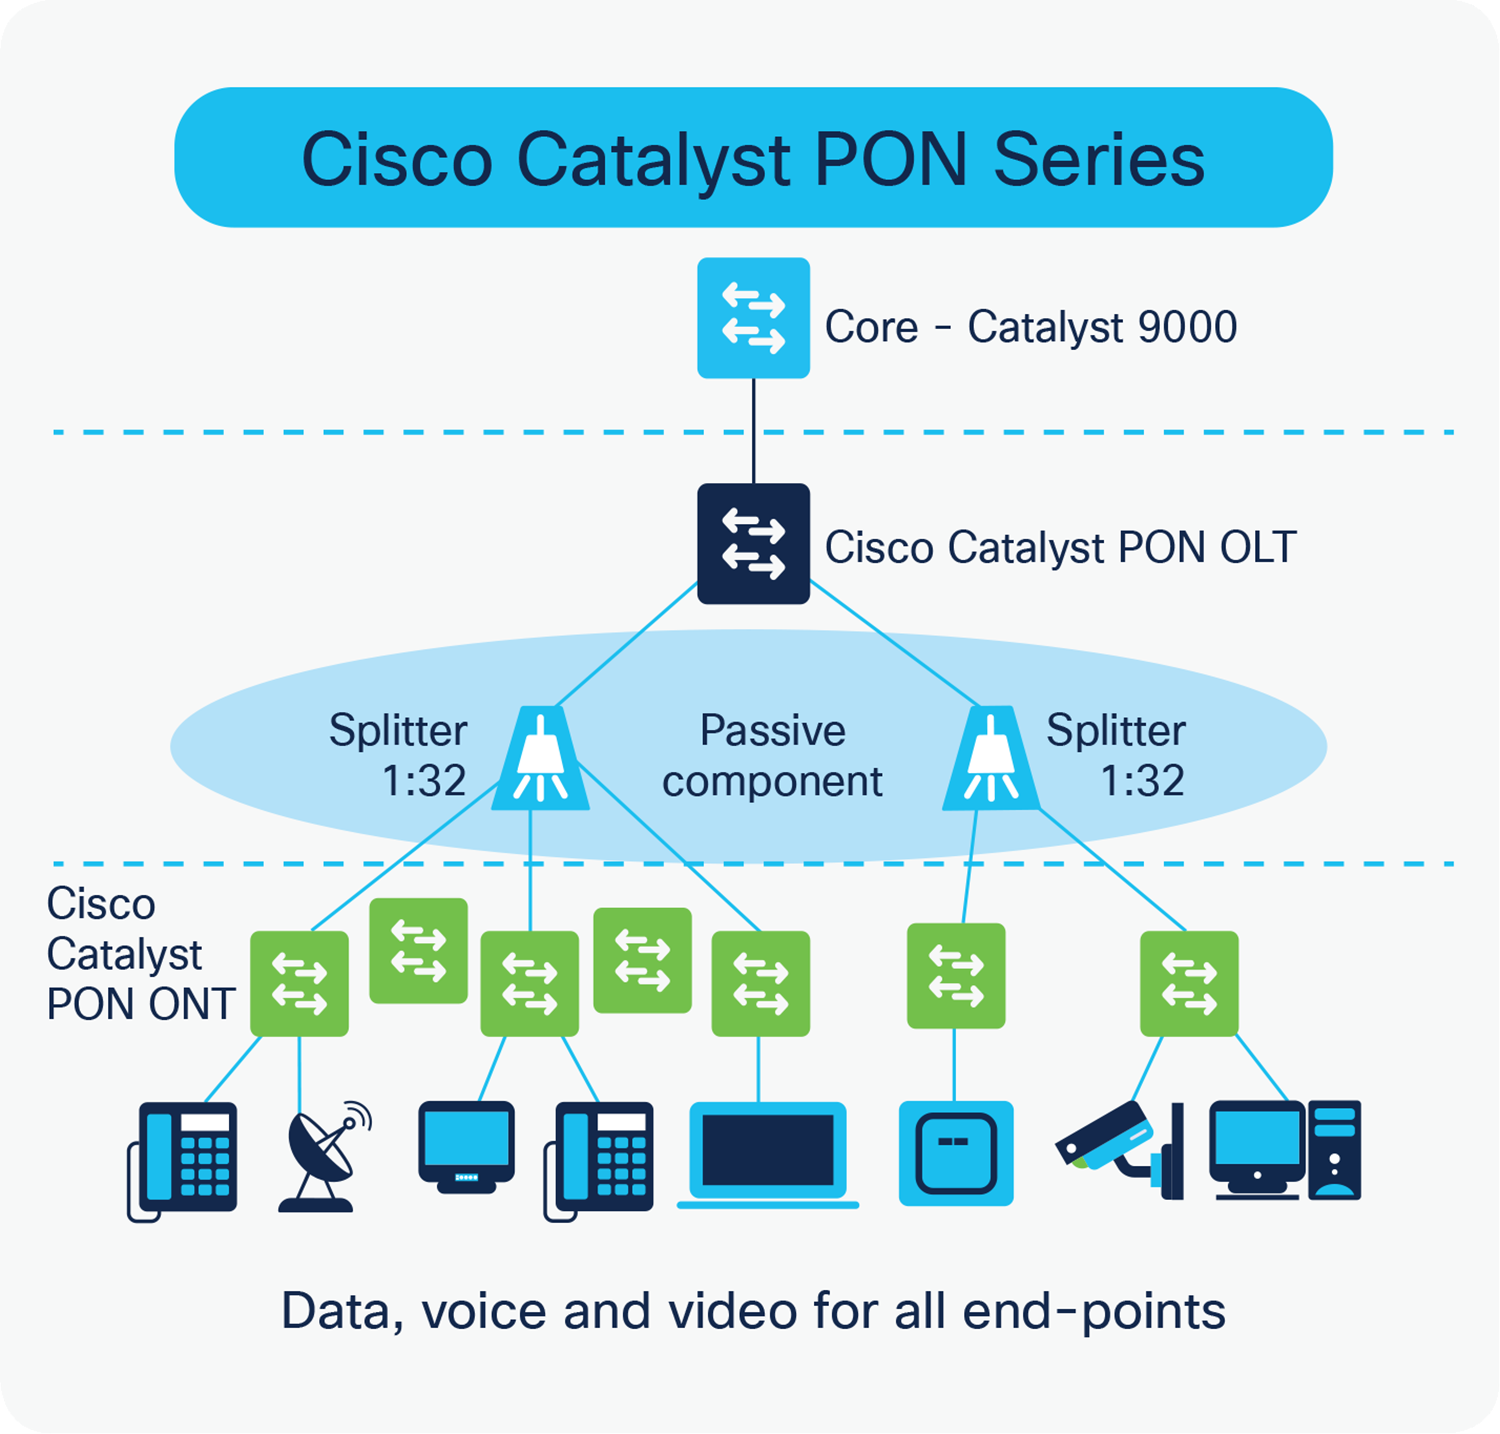 Cisco Catalyst PON Series